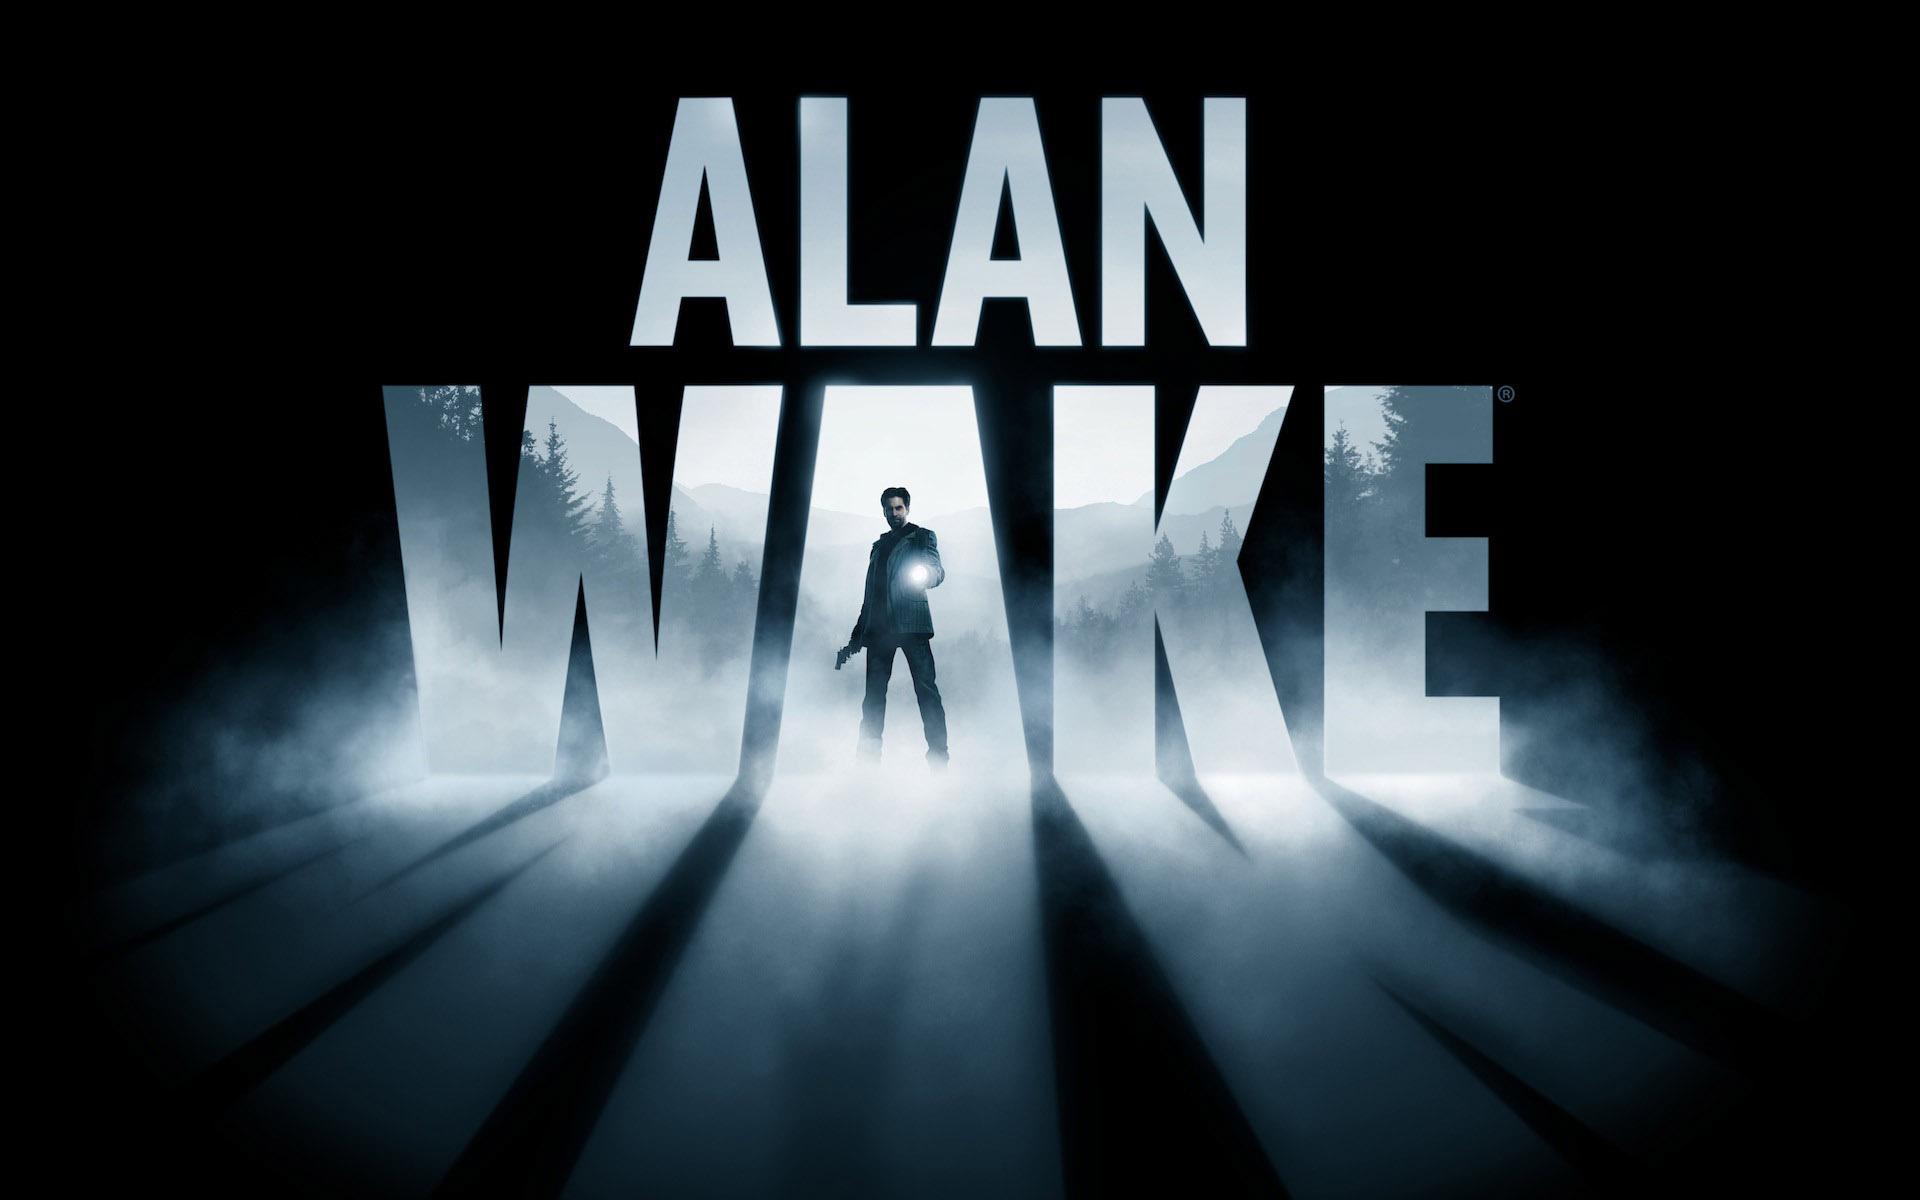 Alan Wake at 1024 x 1024 iPad size wallpapers HD quality